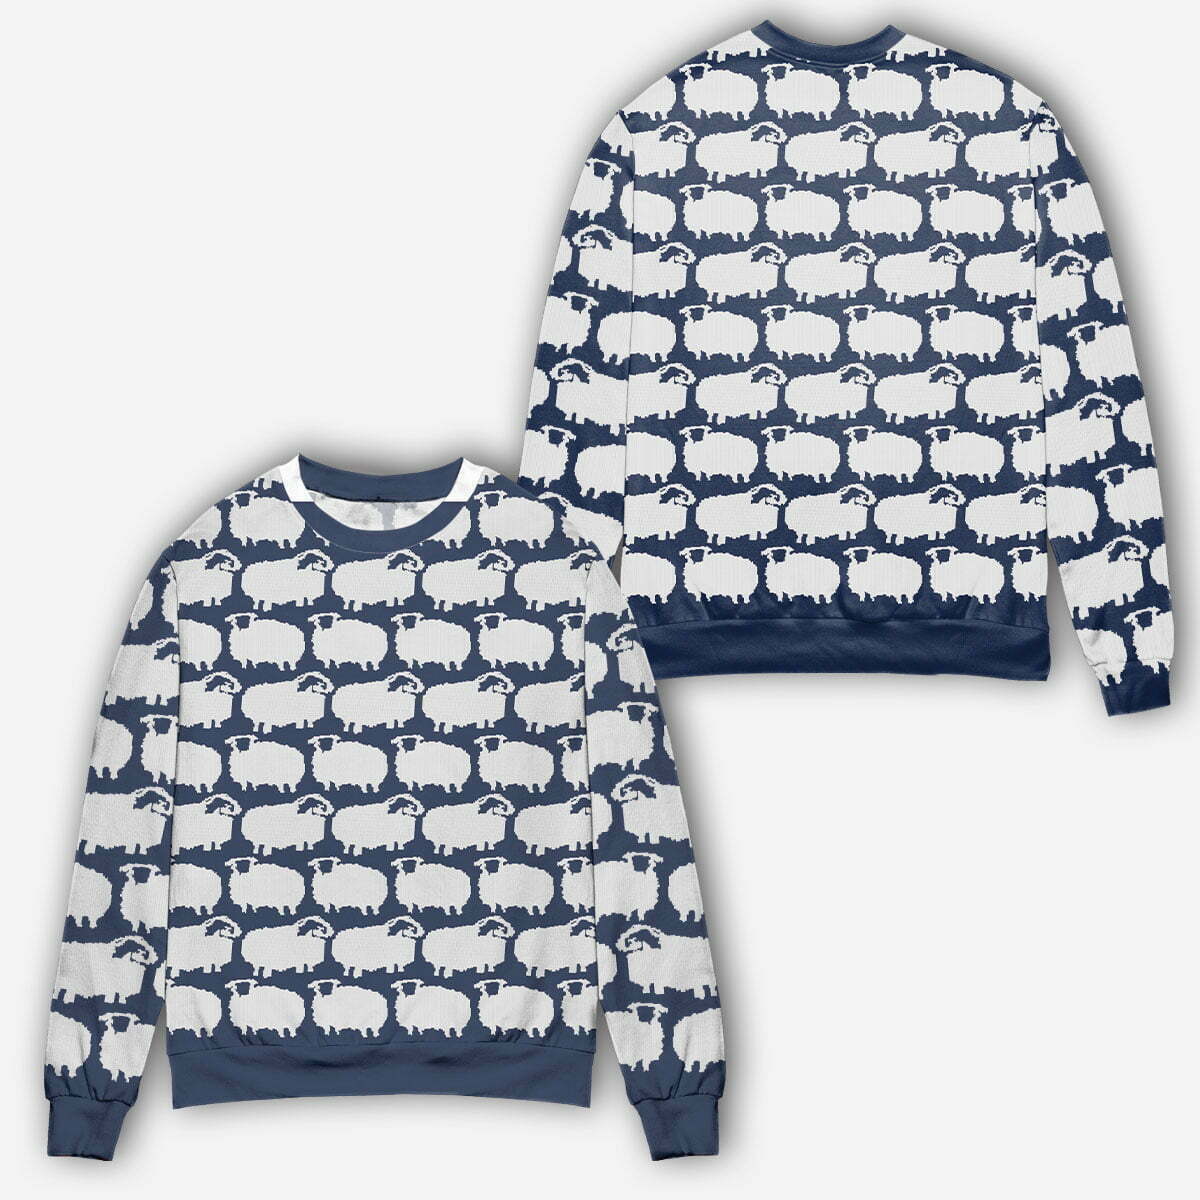 Harry Styles Sheep Sweater Christmas Shirt - AOP Sweater - Navy